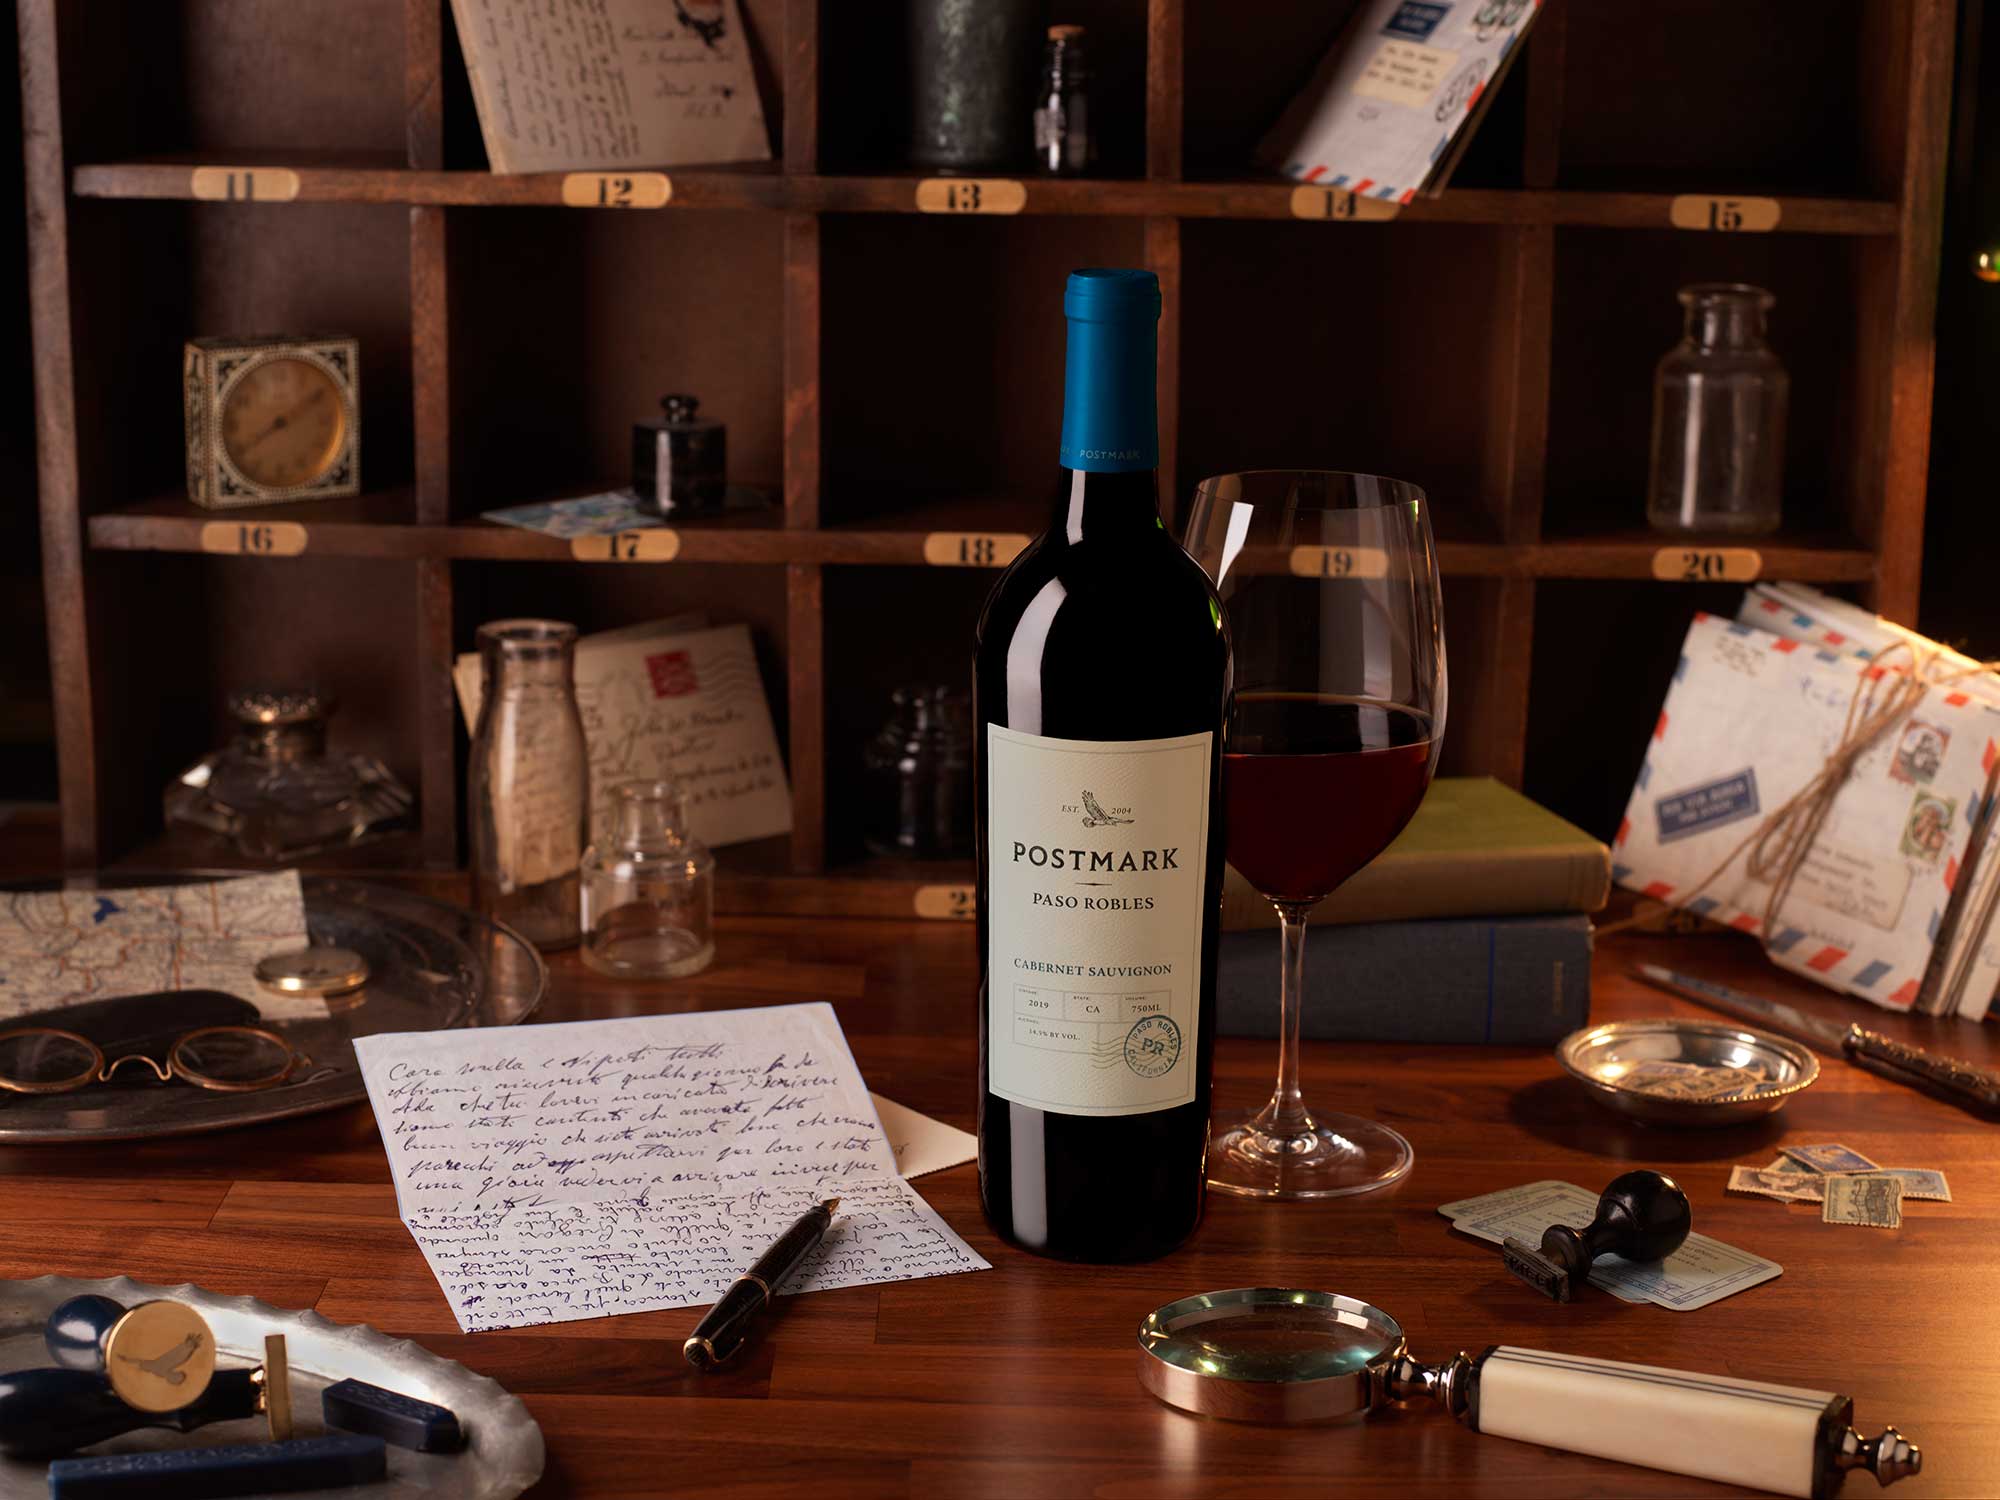 Postmark Wine Bottle and Glass of Paso Cabernet Sauvignon on Desk